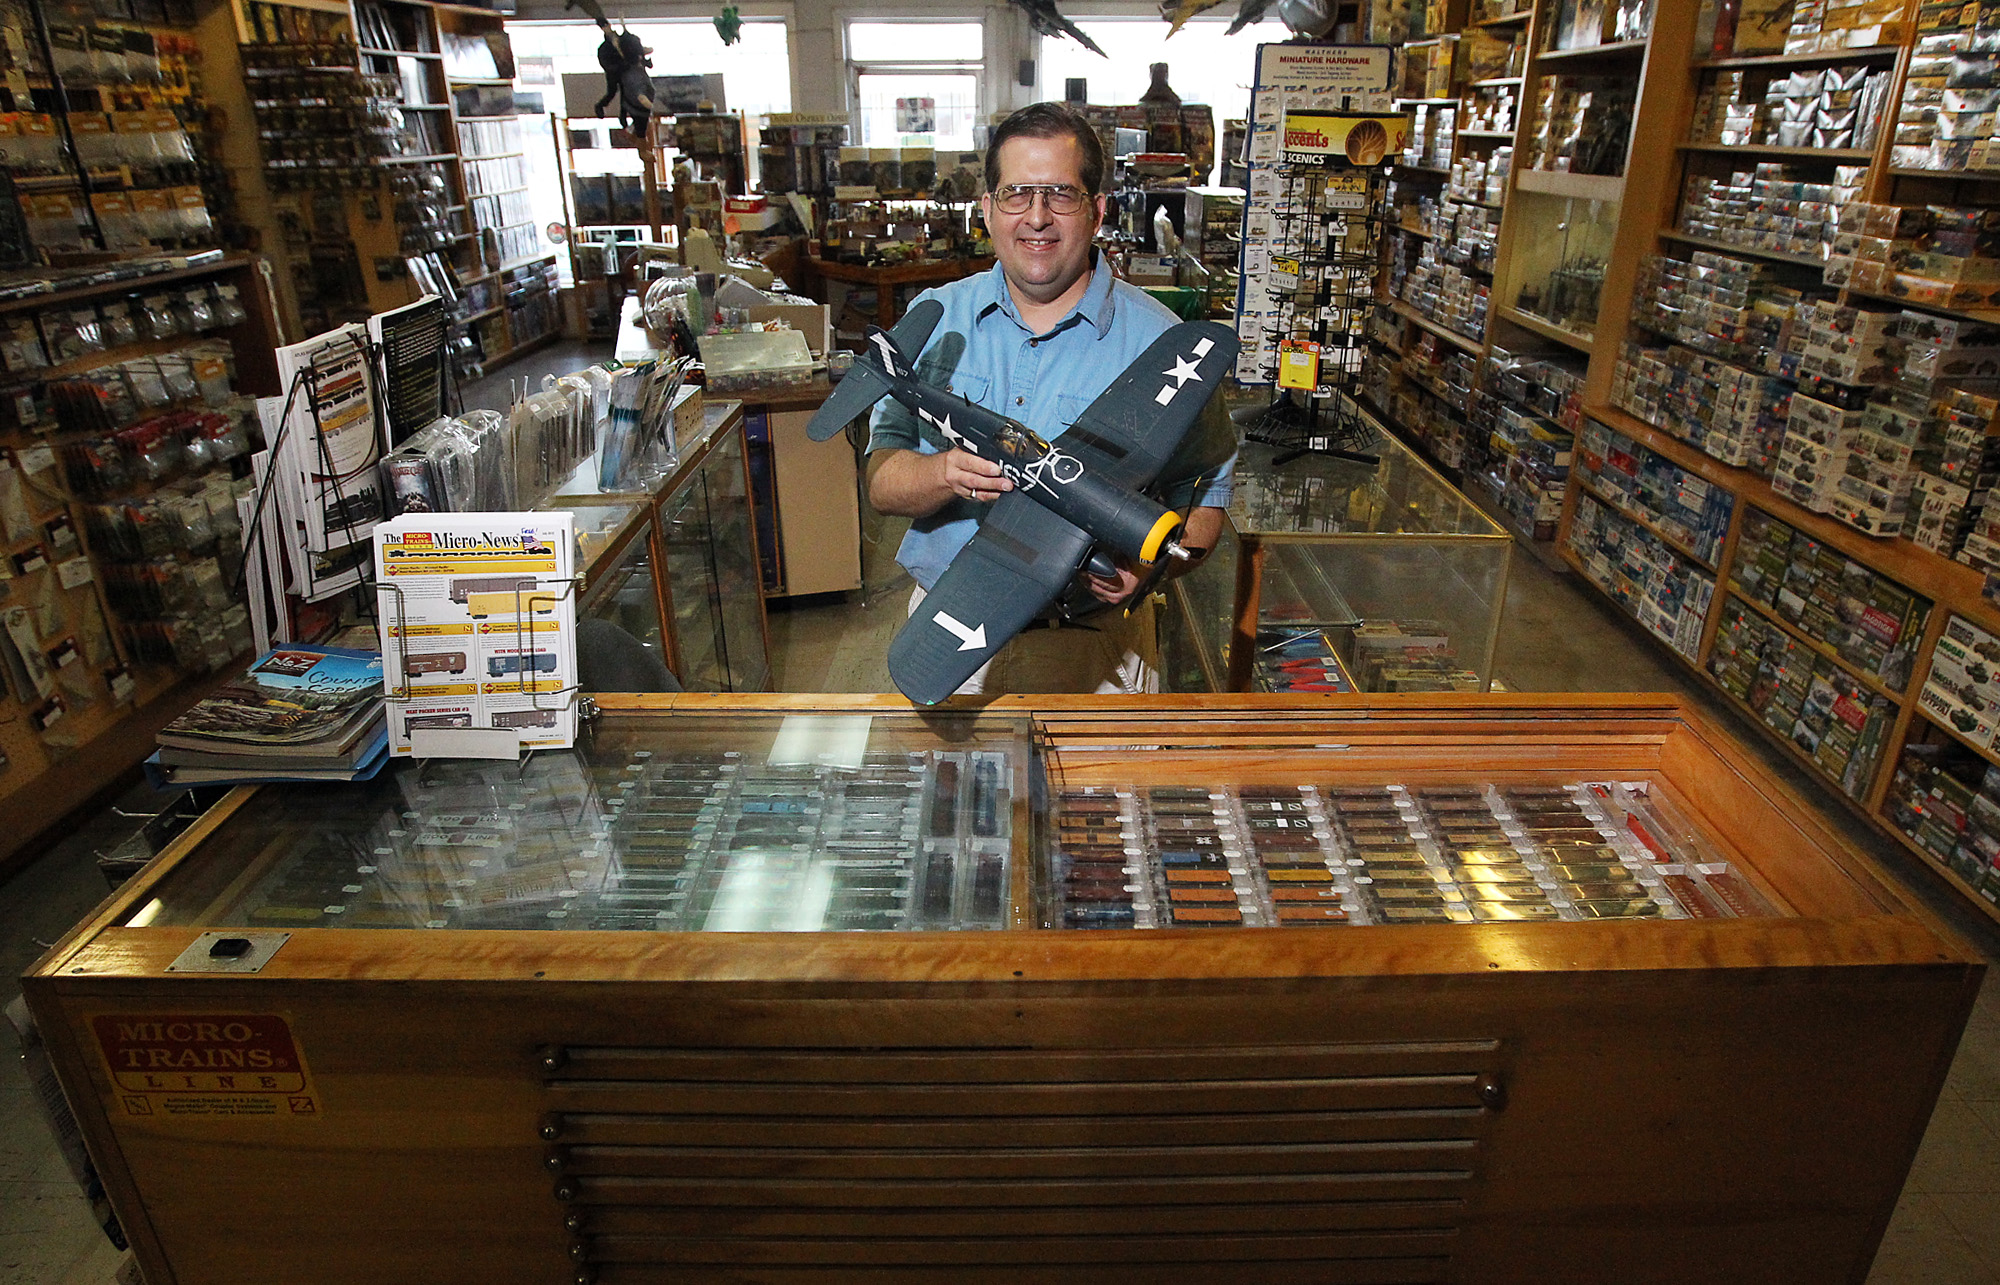 Hobby shop stocks decades of memories